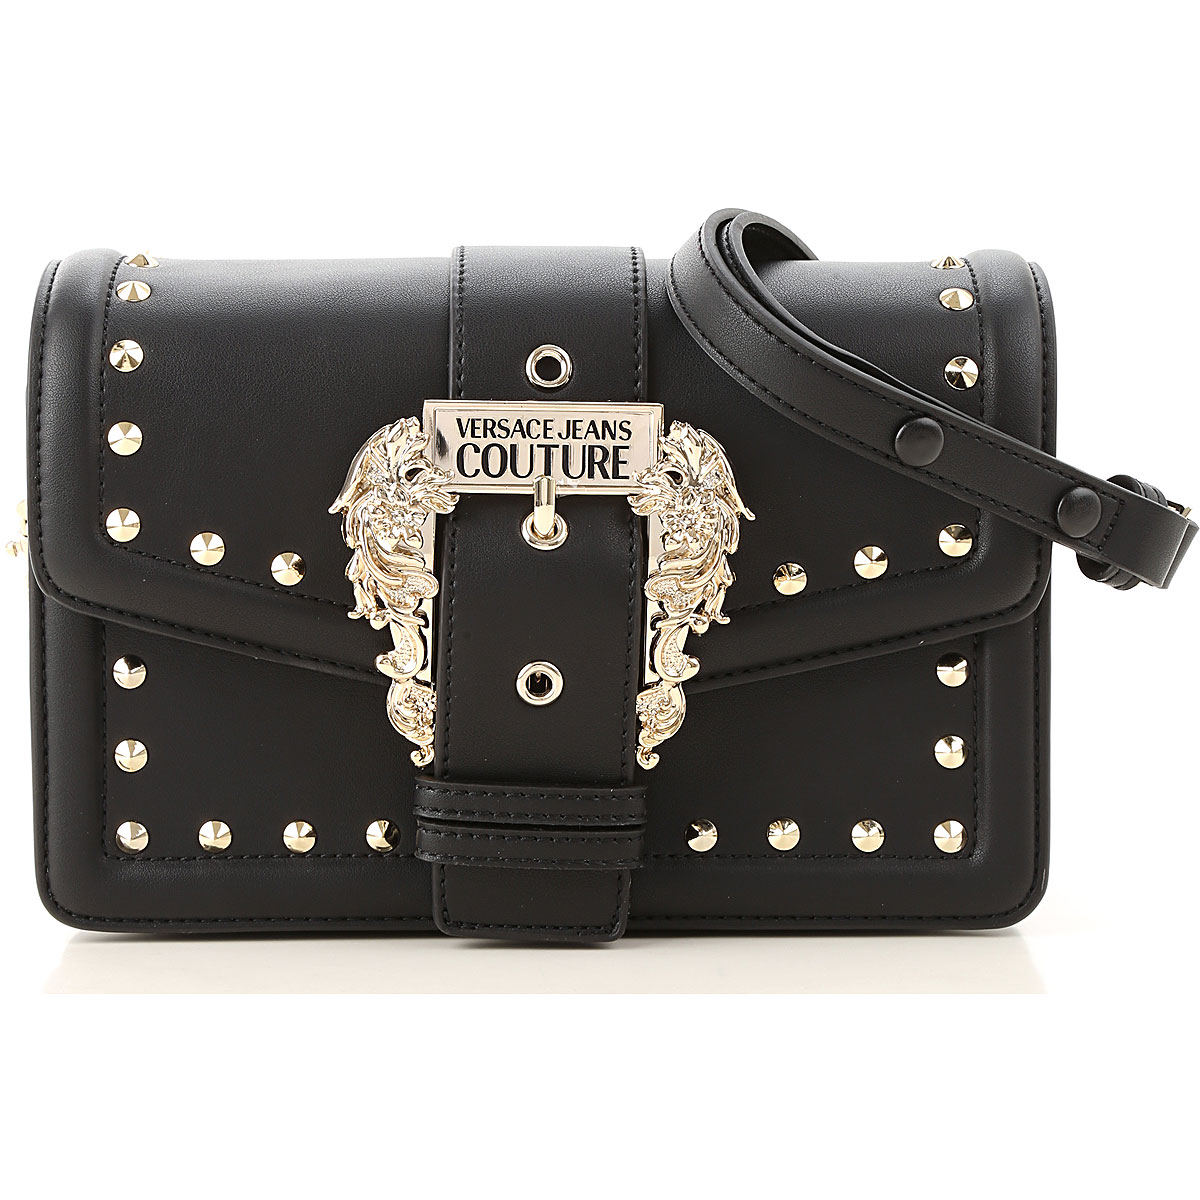 Handbags Versace Jeans Couture , Style code: e1vubbf1-40302-m57